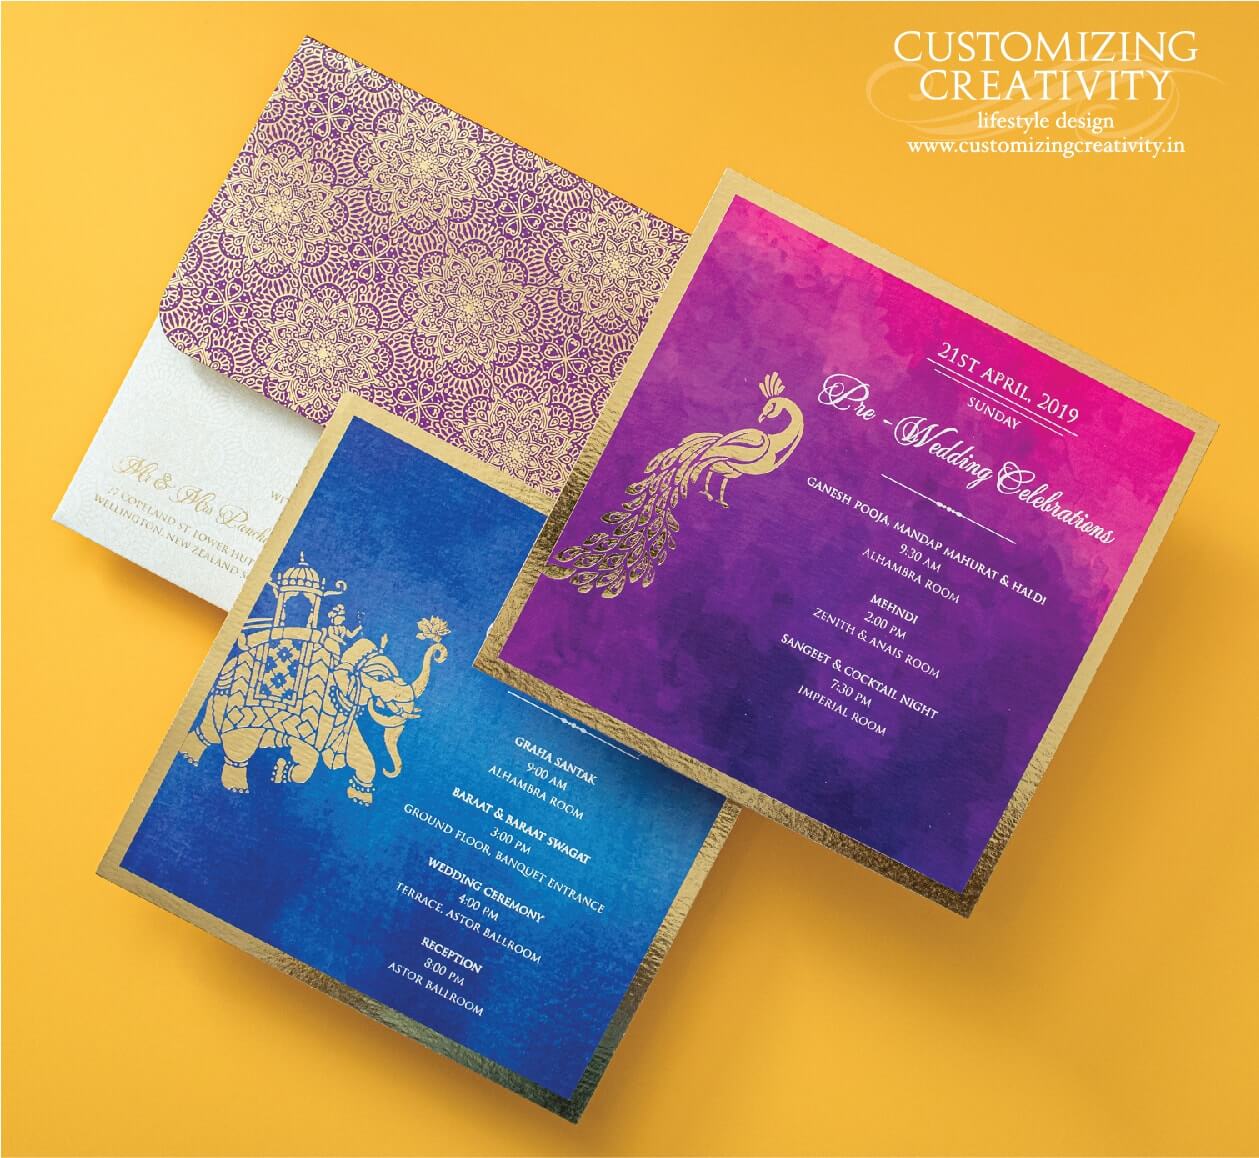 customized-cards-and-unique-wedding-invitations-customizing-creativity